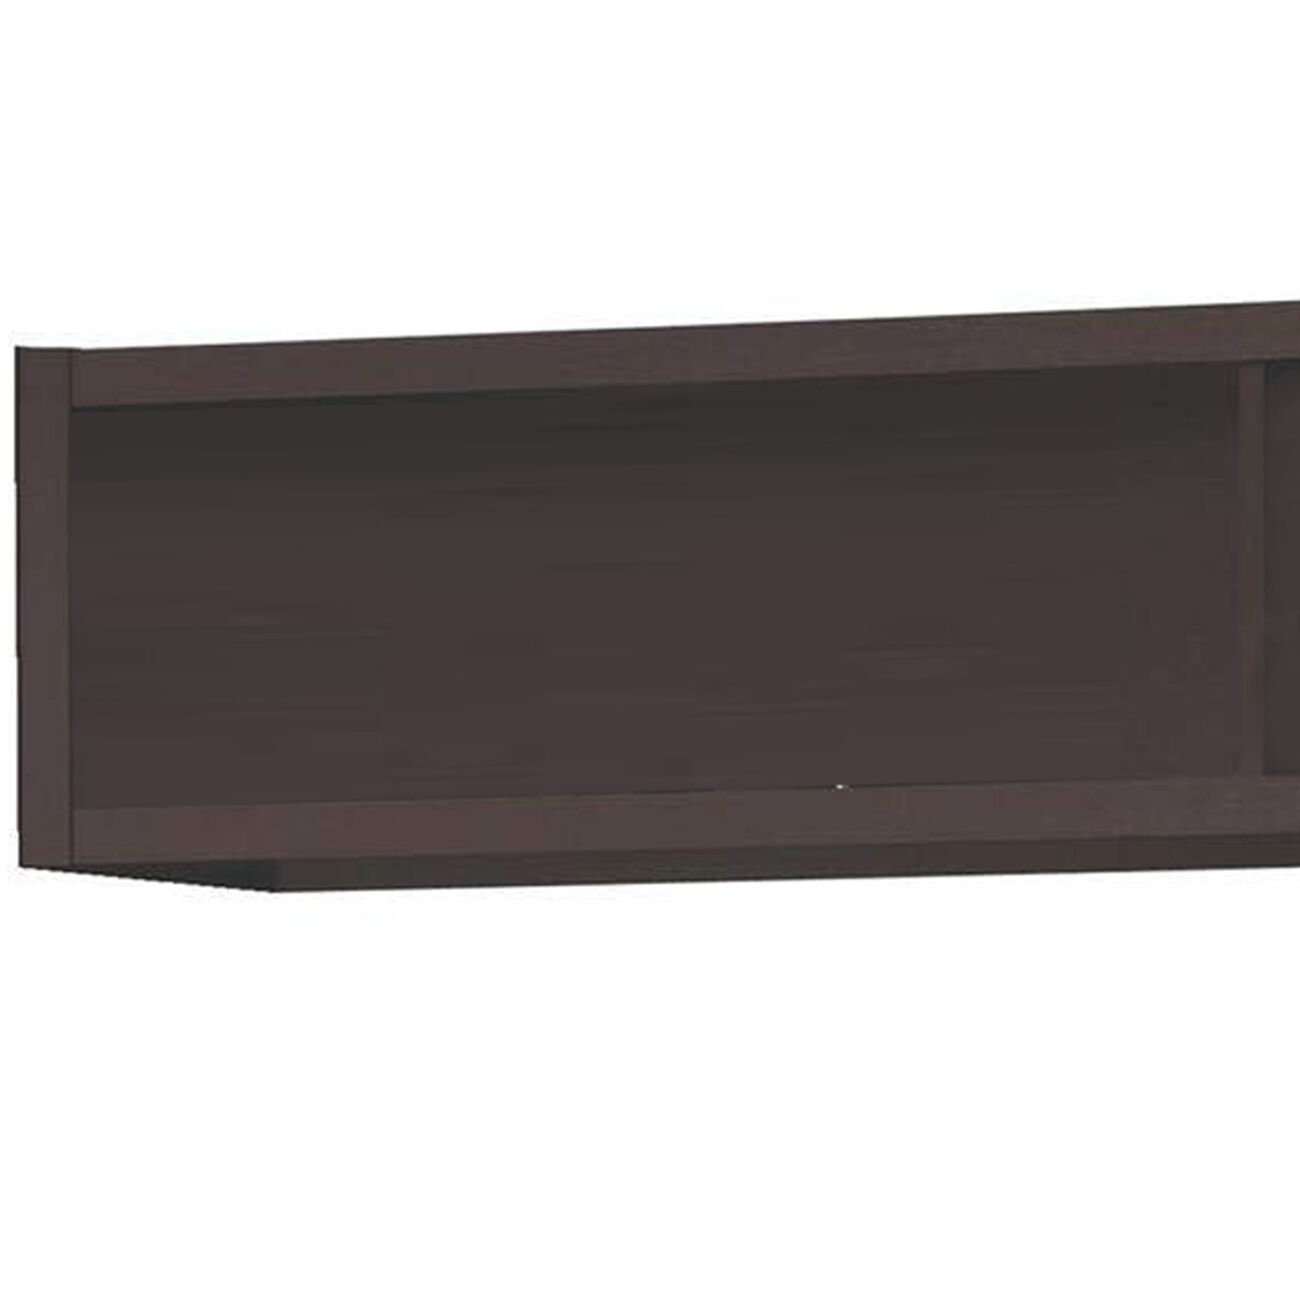 Wooden Media Cabinet Bridge with Back Panel, Espresso Brown